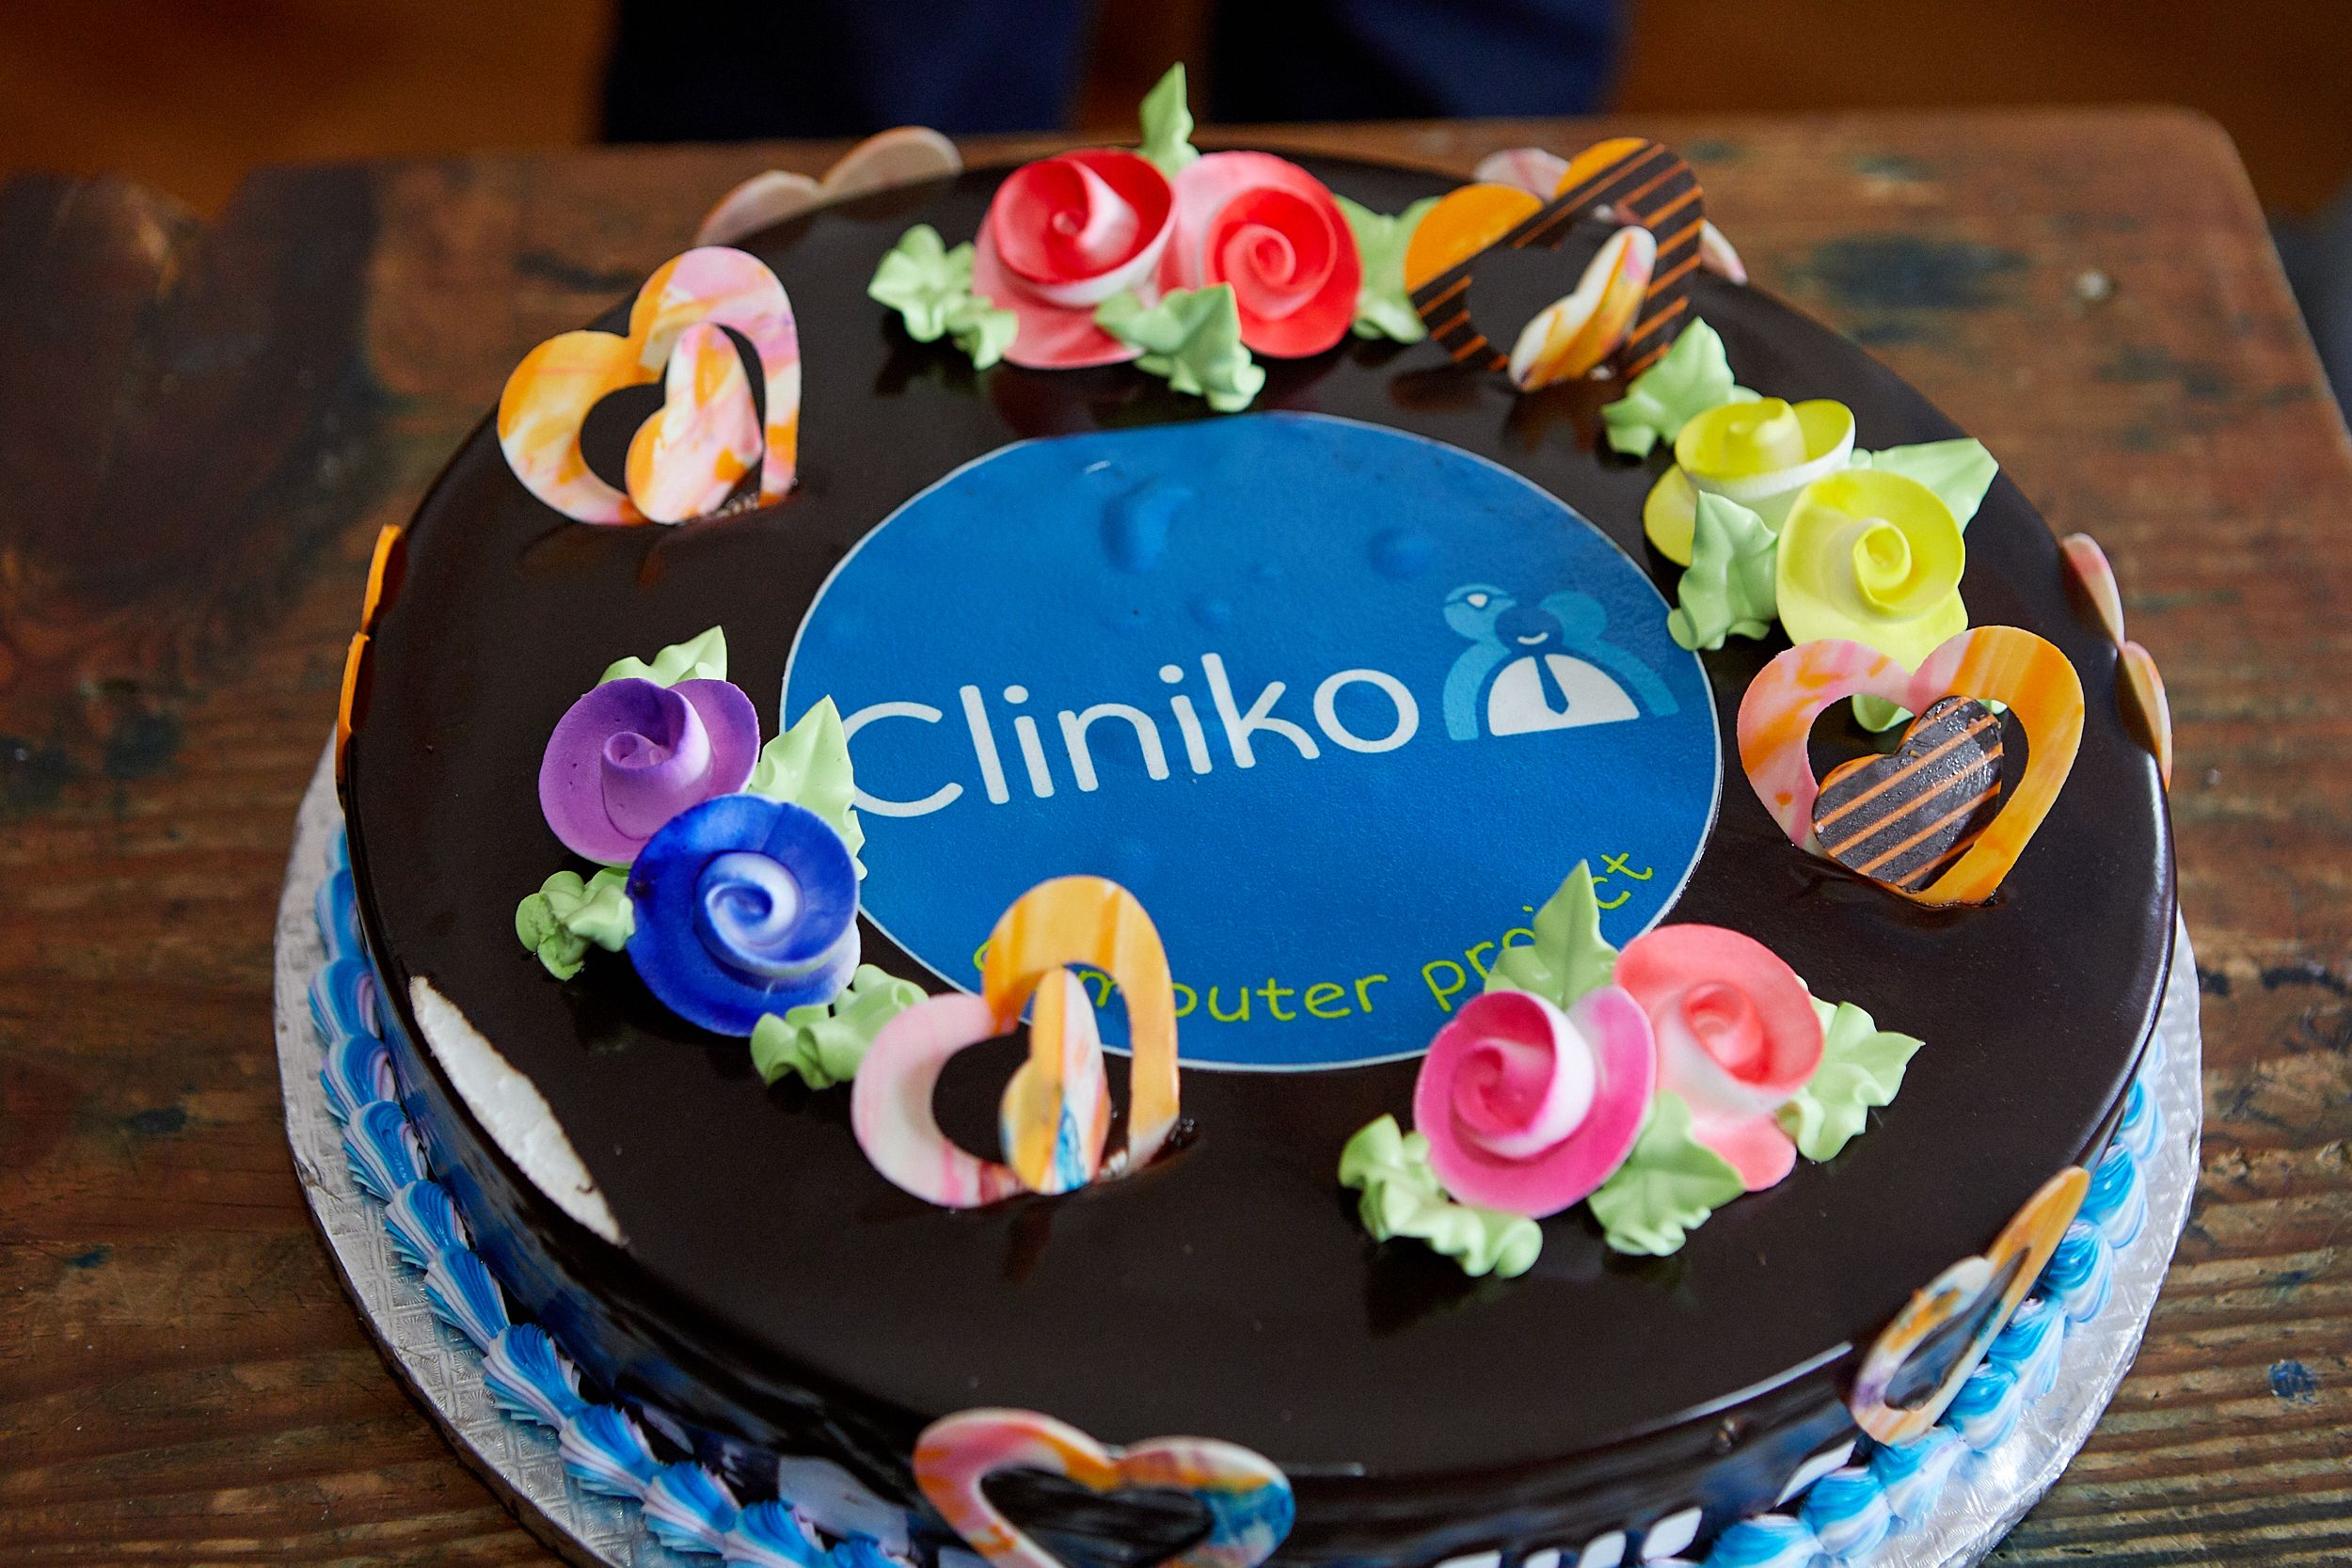 A thank-you cake for Cliniko